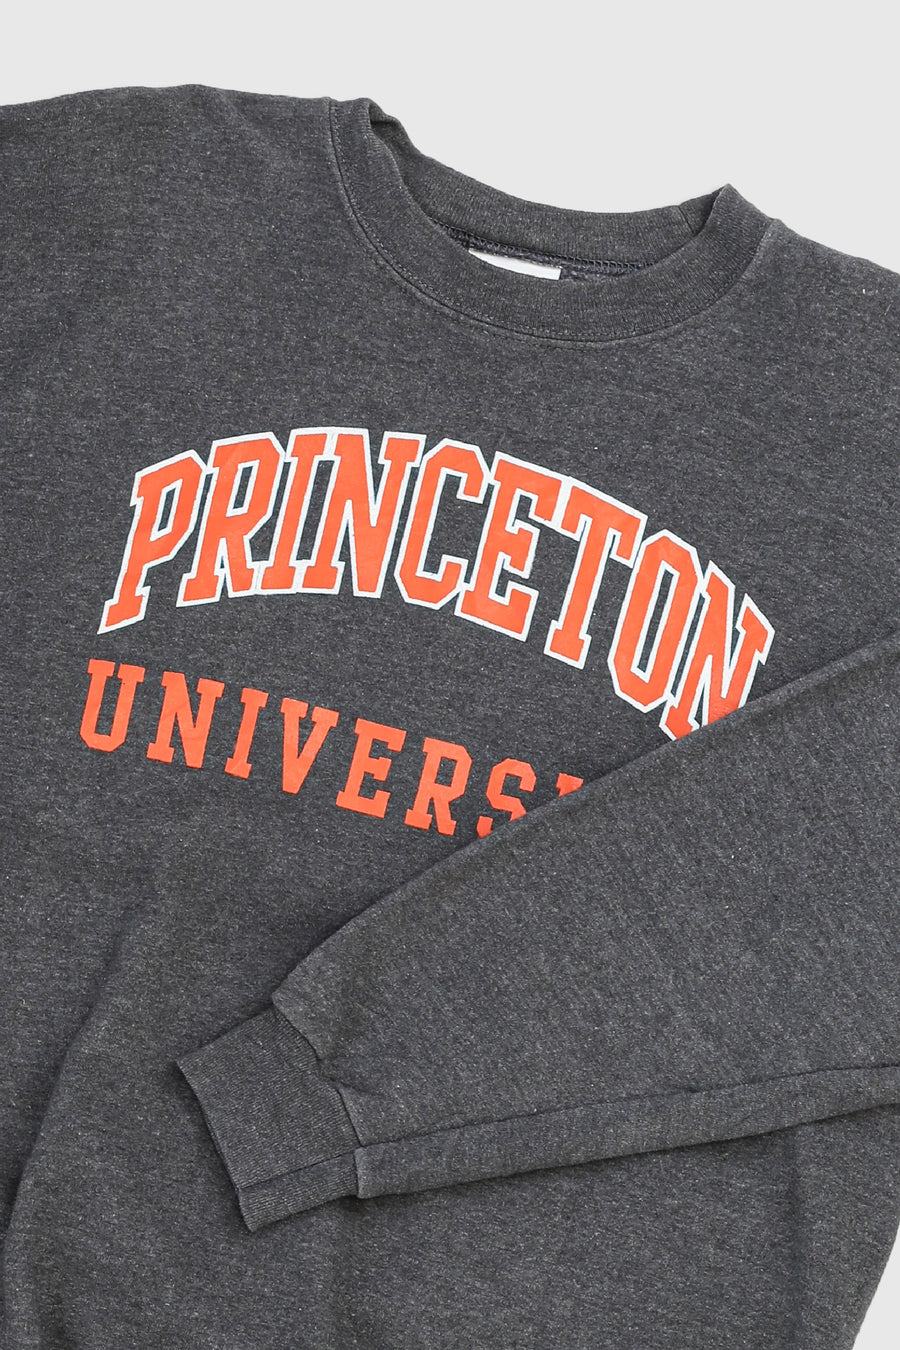 Vintage Princeton University Sweatshirt